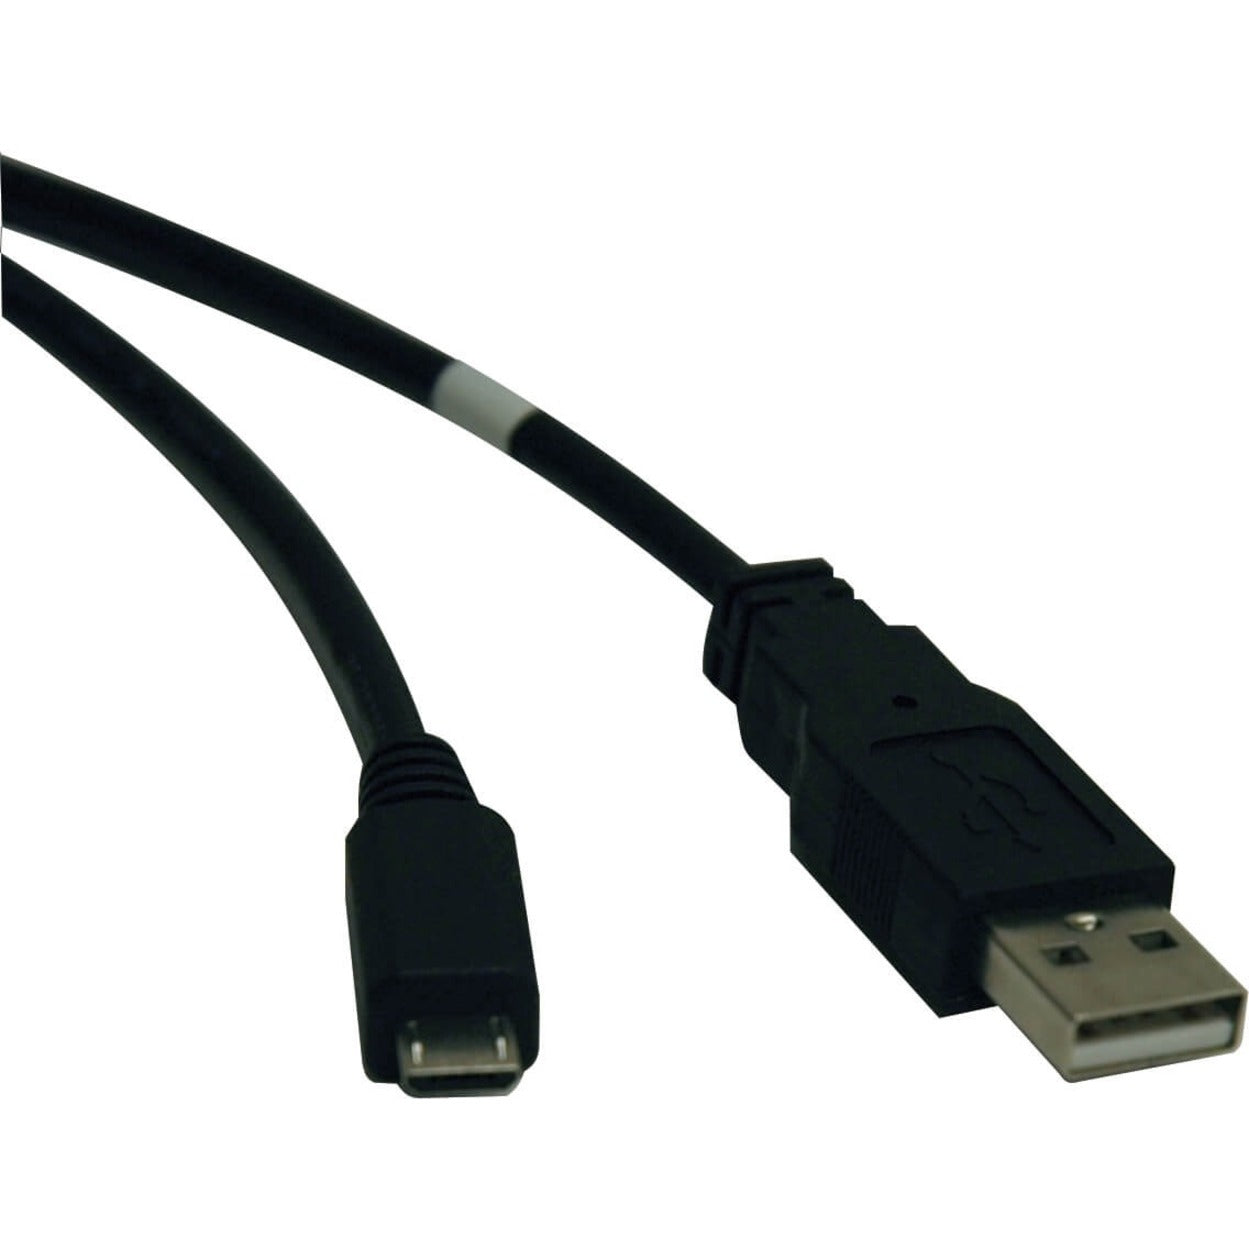 Tripp Lite U050-010 USB Cable Adapter, 10 ft, Copper Conductor, Black